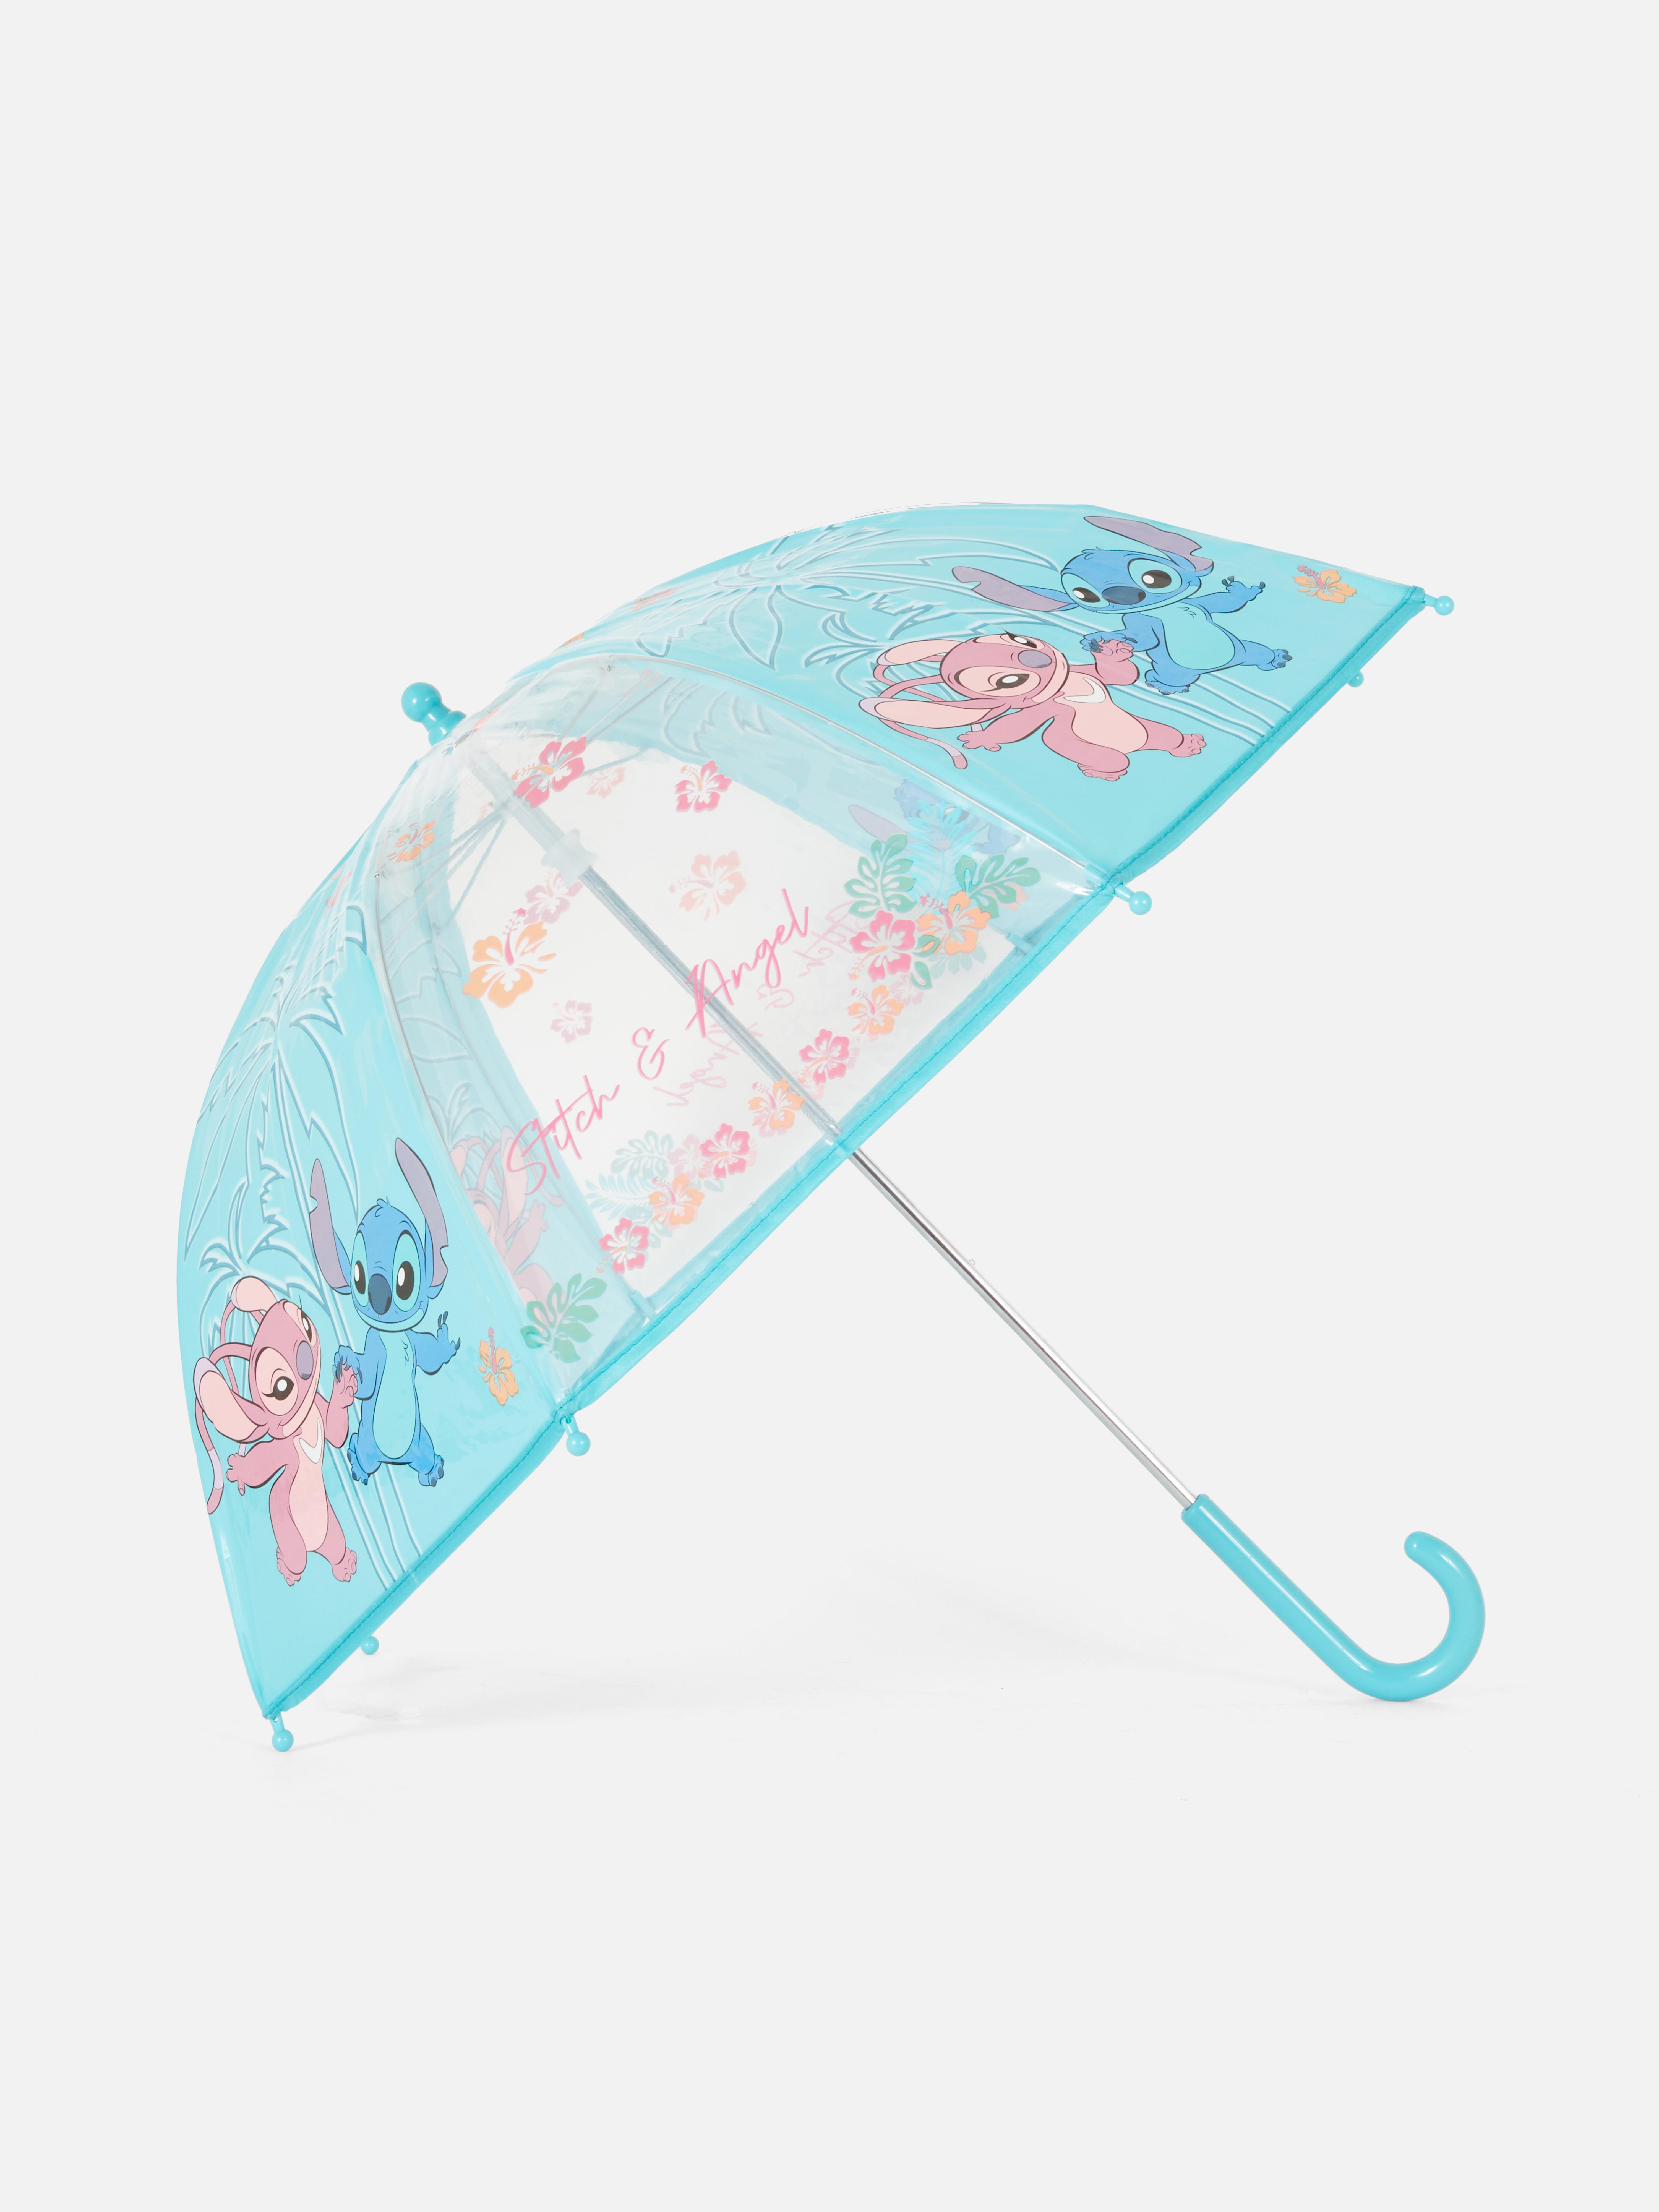 Disney’s Lilo & Stitch Umbrella